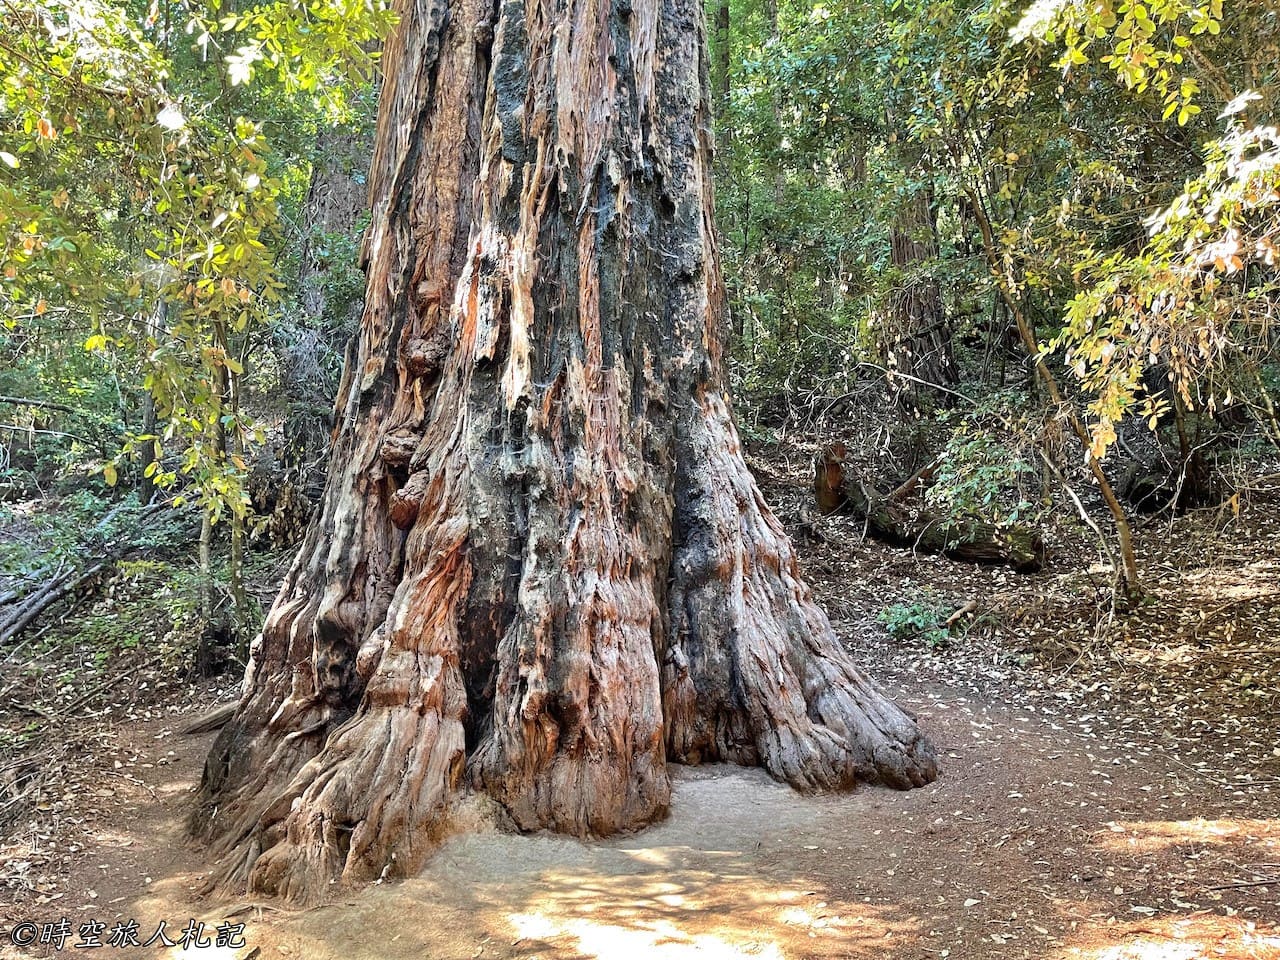 Portola redwood state park 19